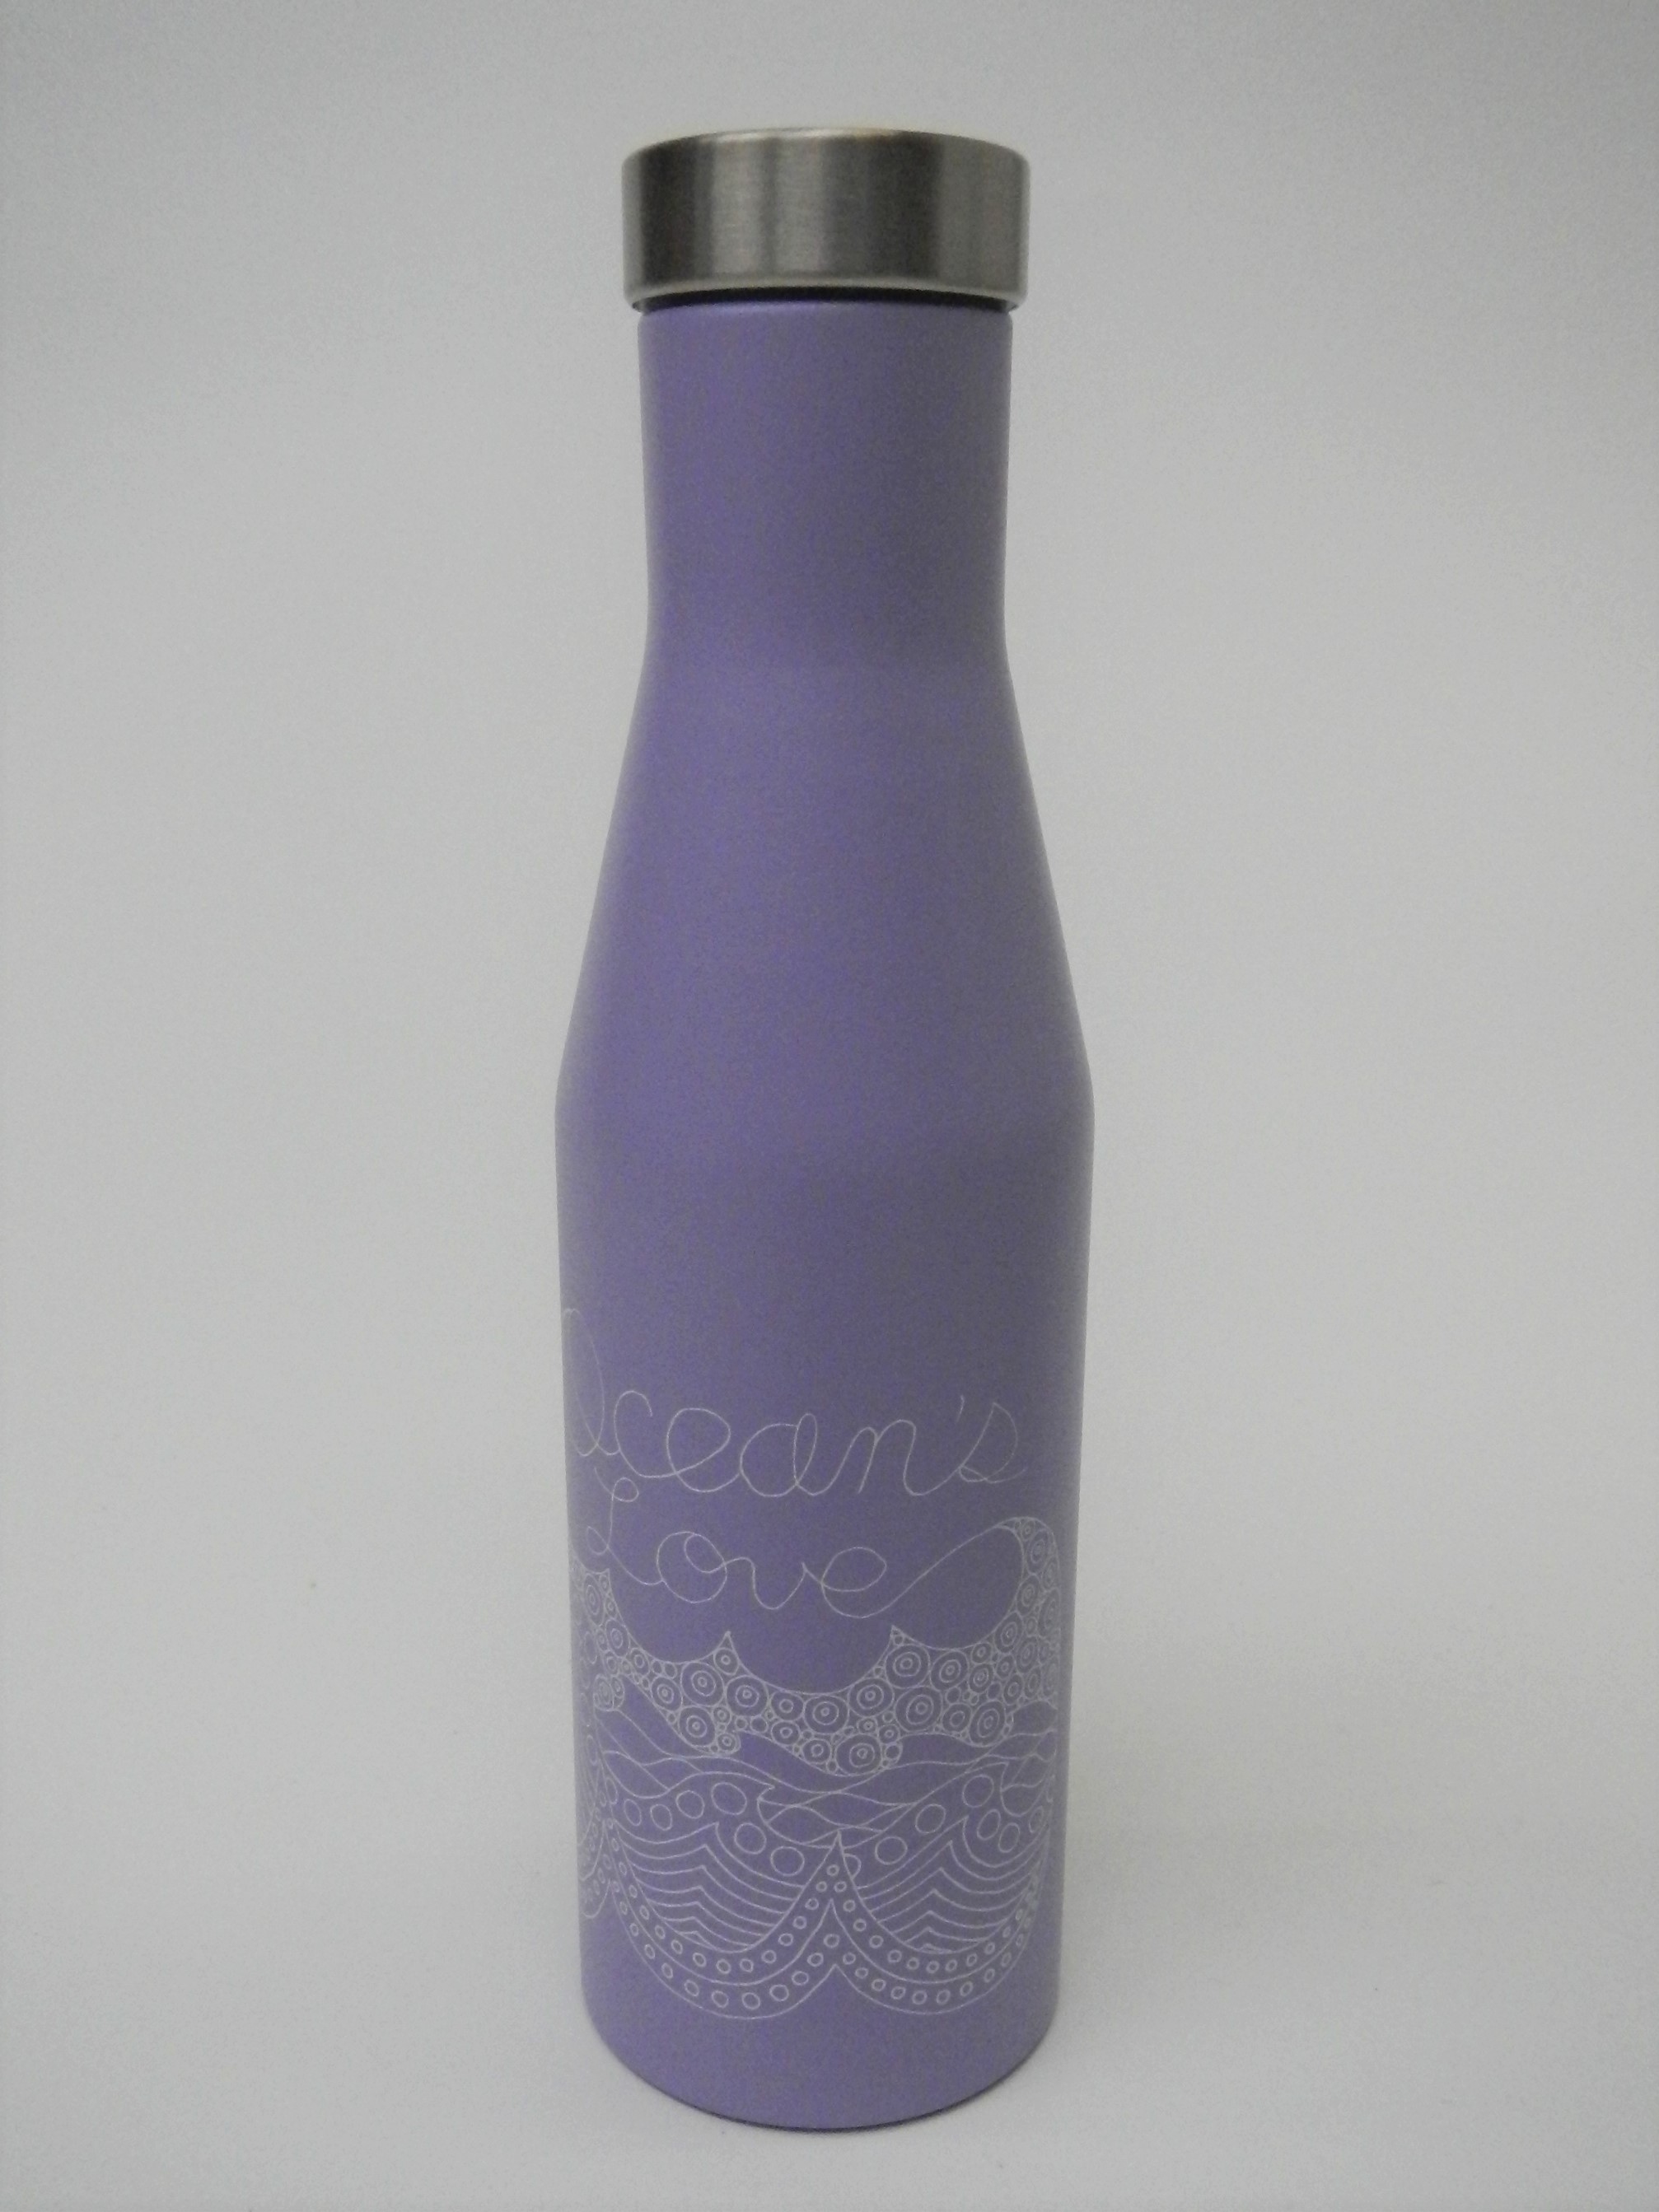 MIZUコラボ　保温保冷ボトル　ラベンダー画像